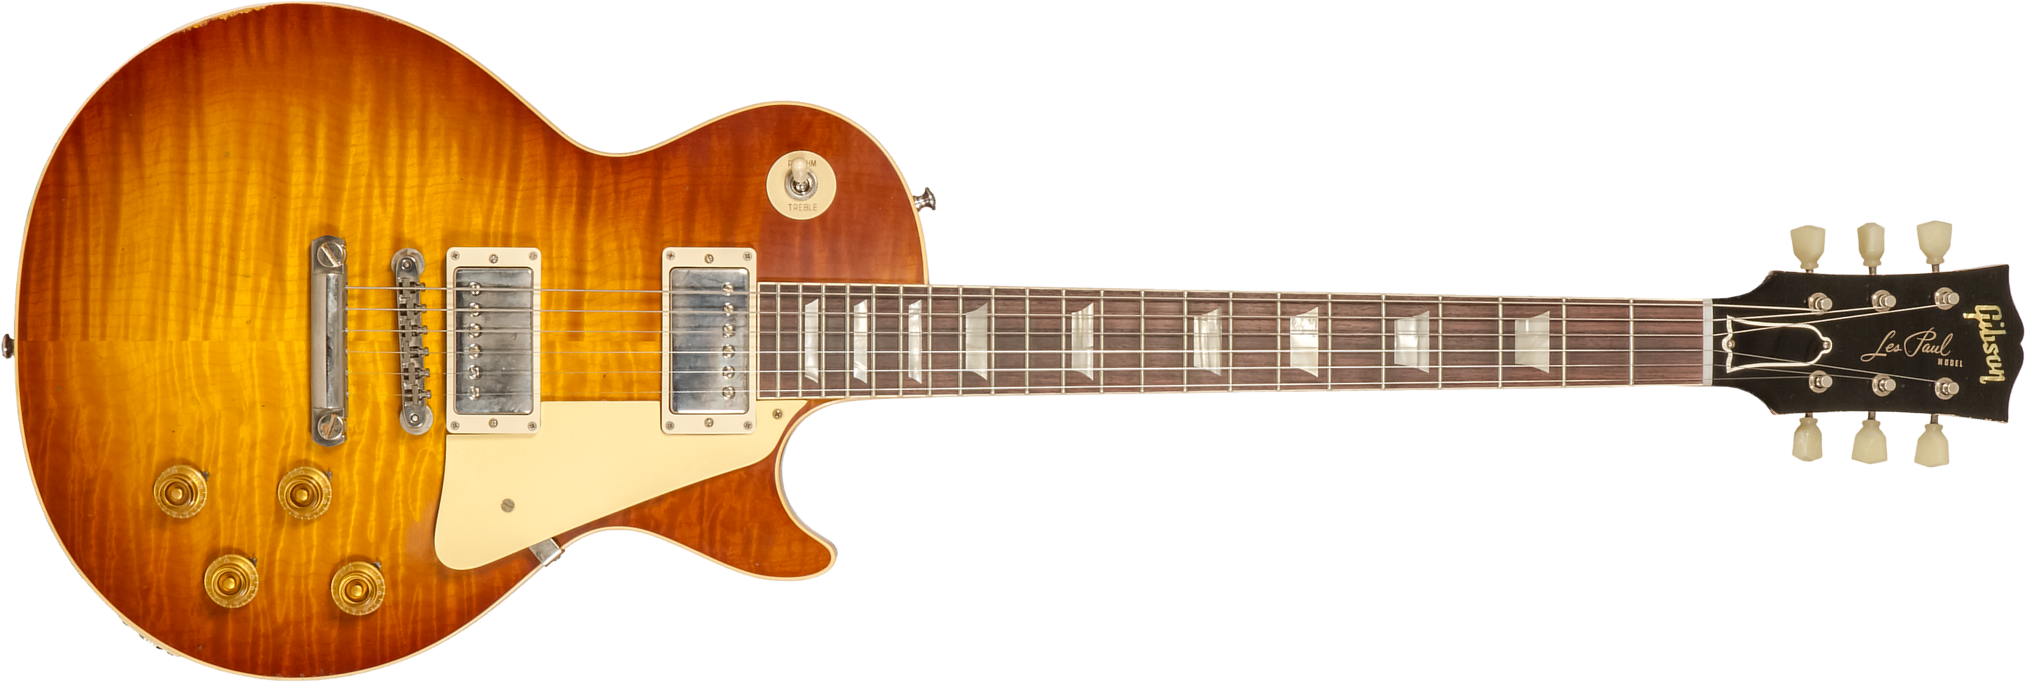 Gibson Custom Shop M2m Les Paul Standard 1959 Reissue 2h Ht Rw #94327 - Murphy Lab Light Aged Ice Tea Burst - Single cut electric guitar - Main pictur